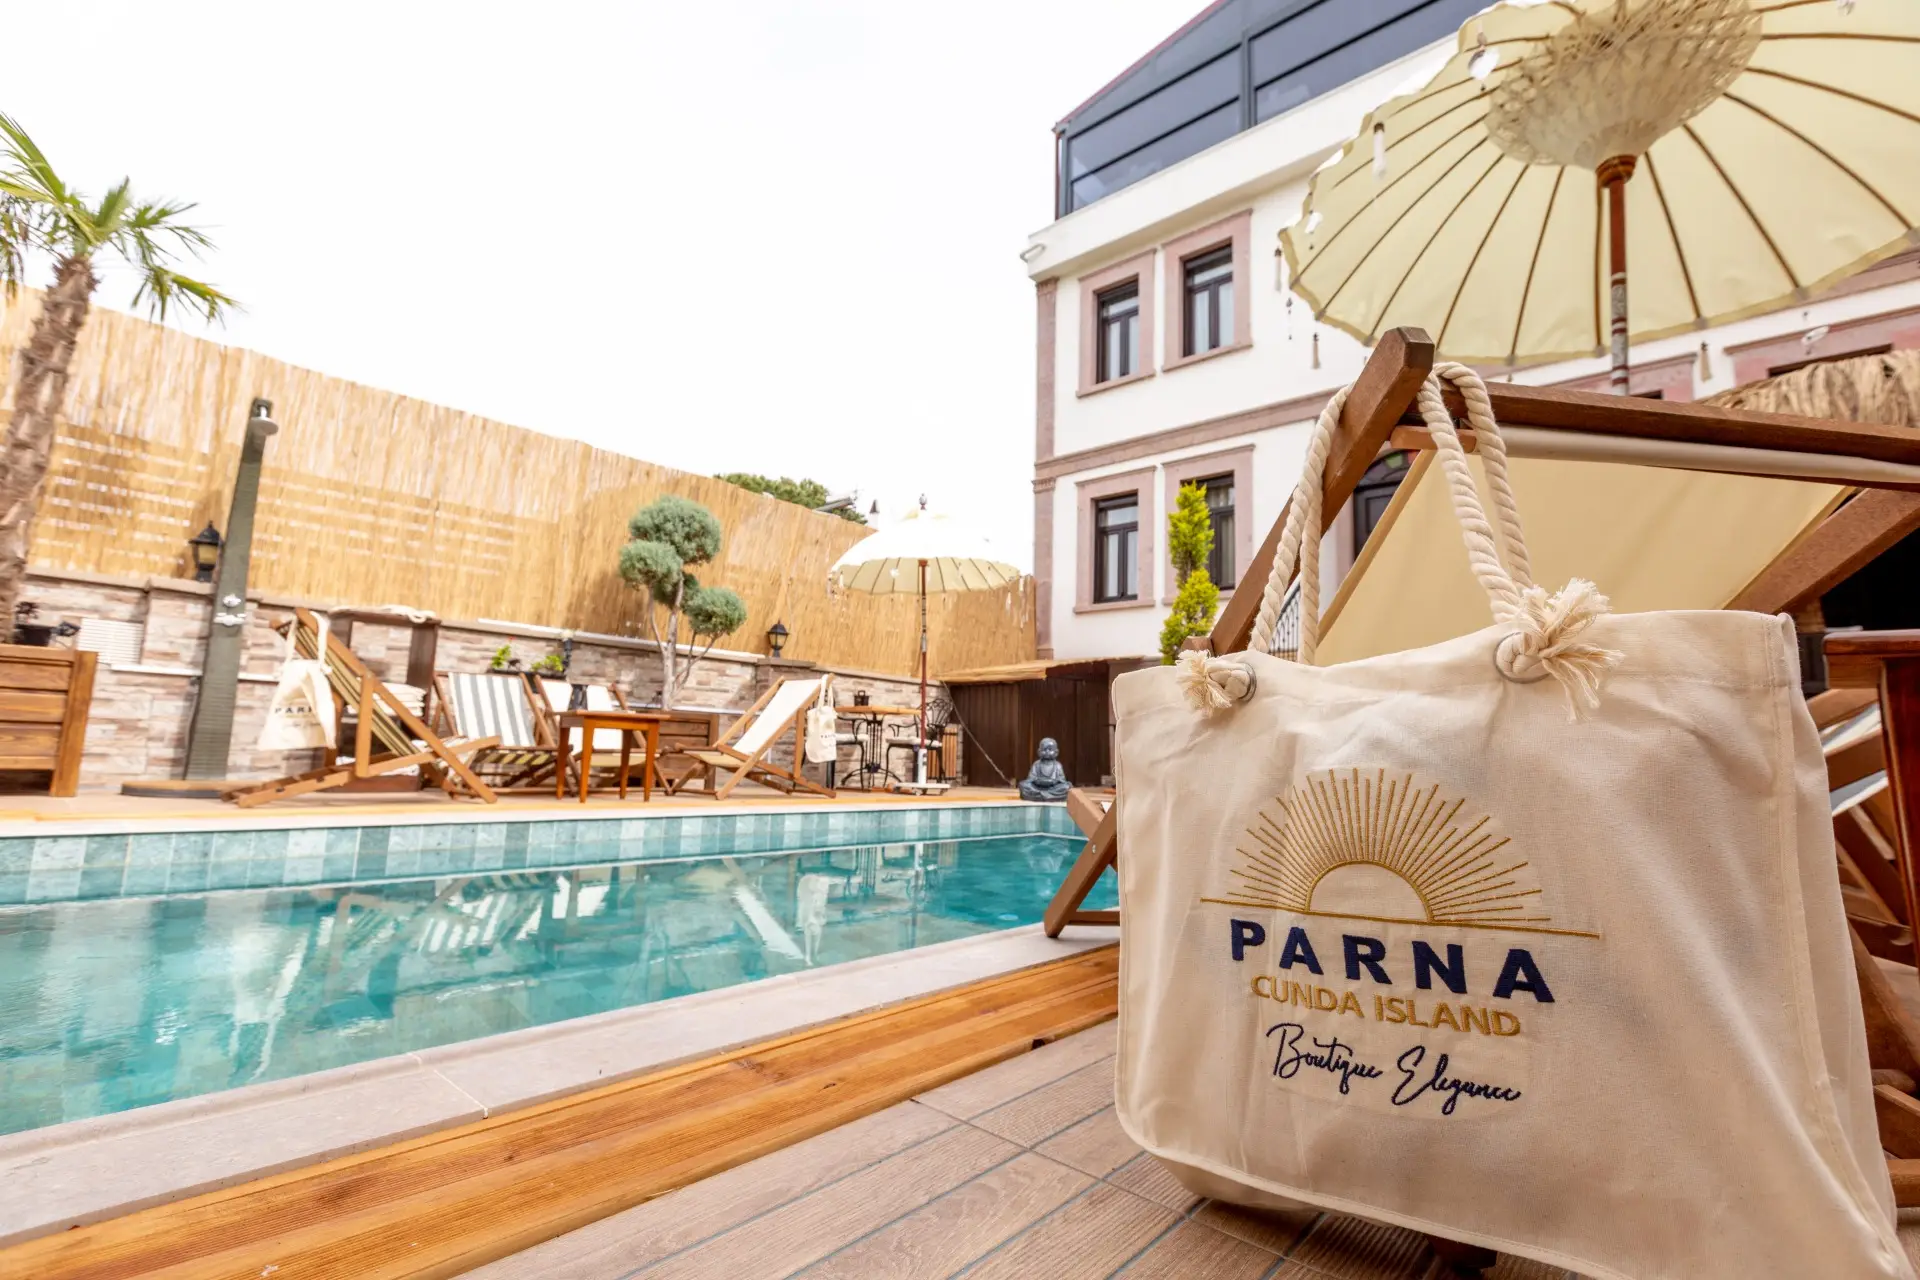 Parna Hotel